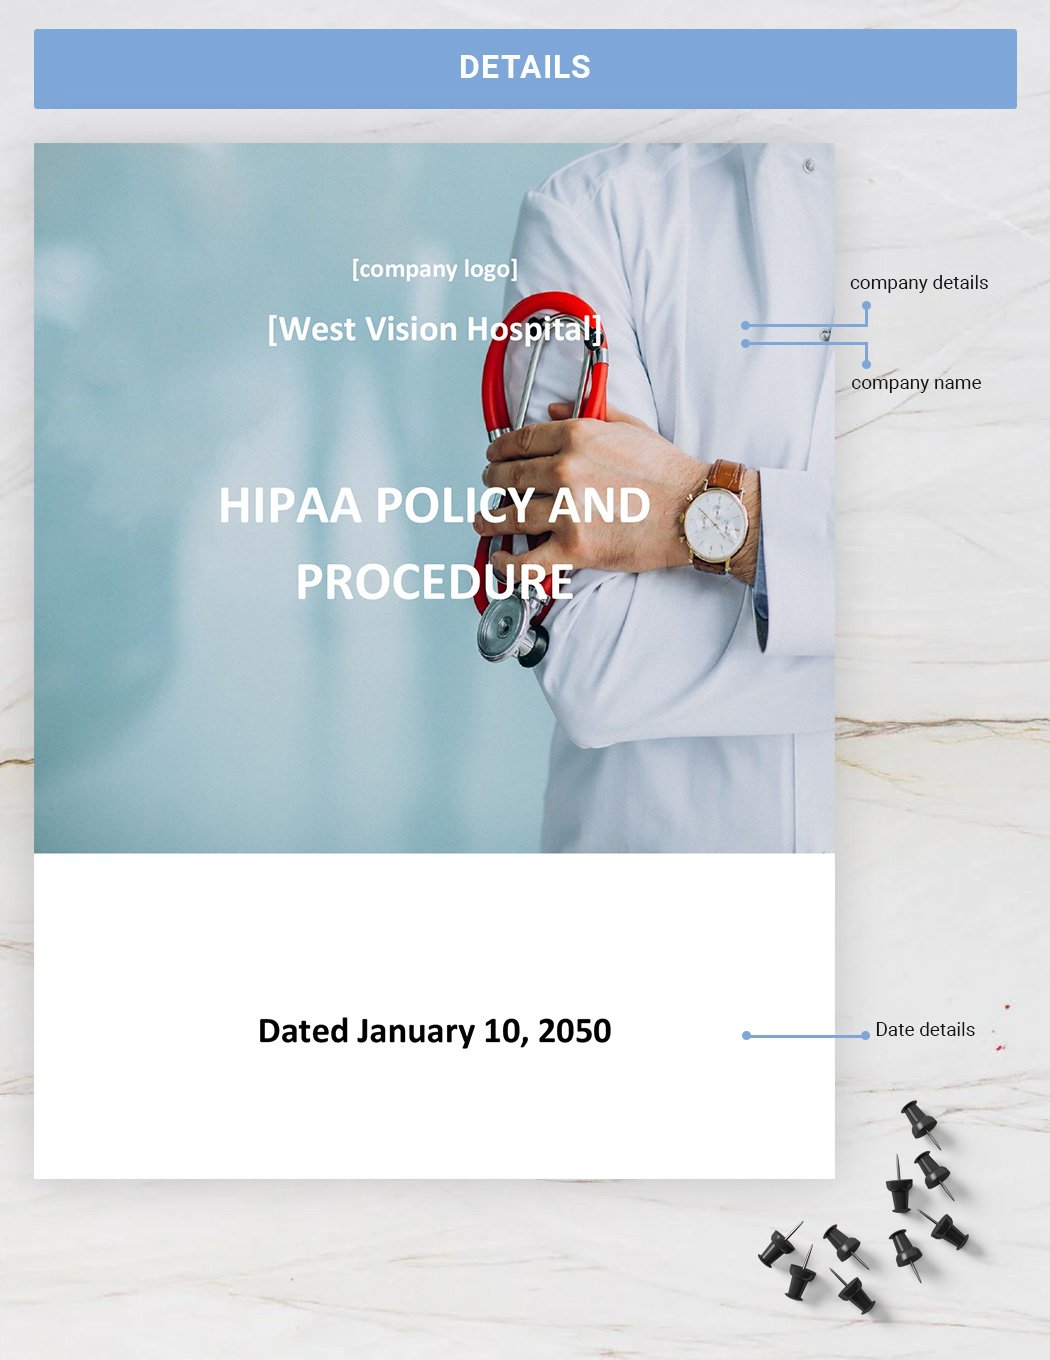 HIPAA Policy and Procedure